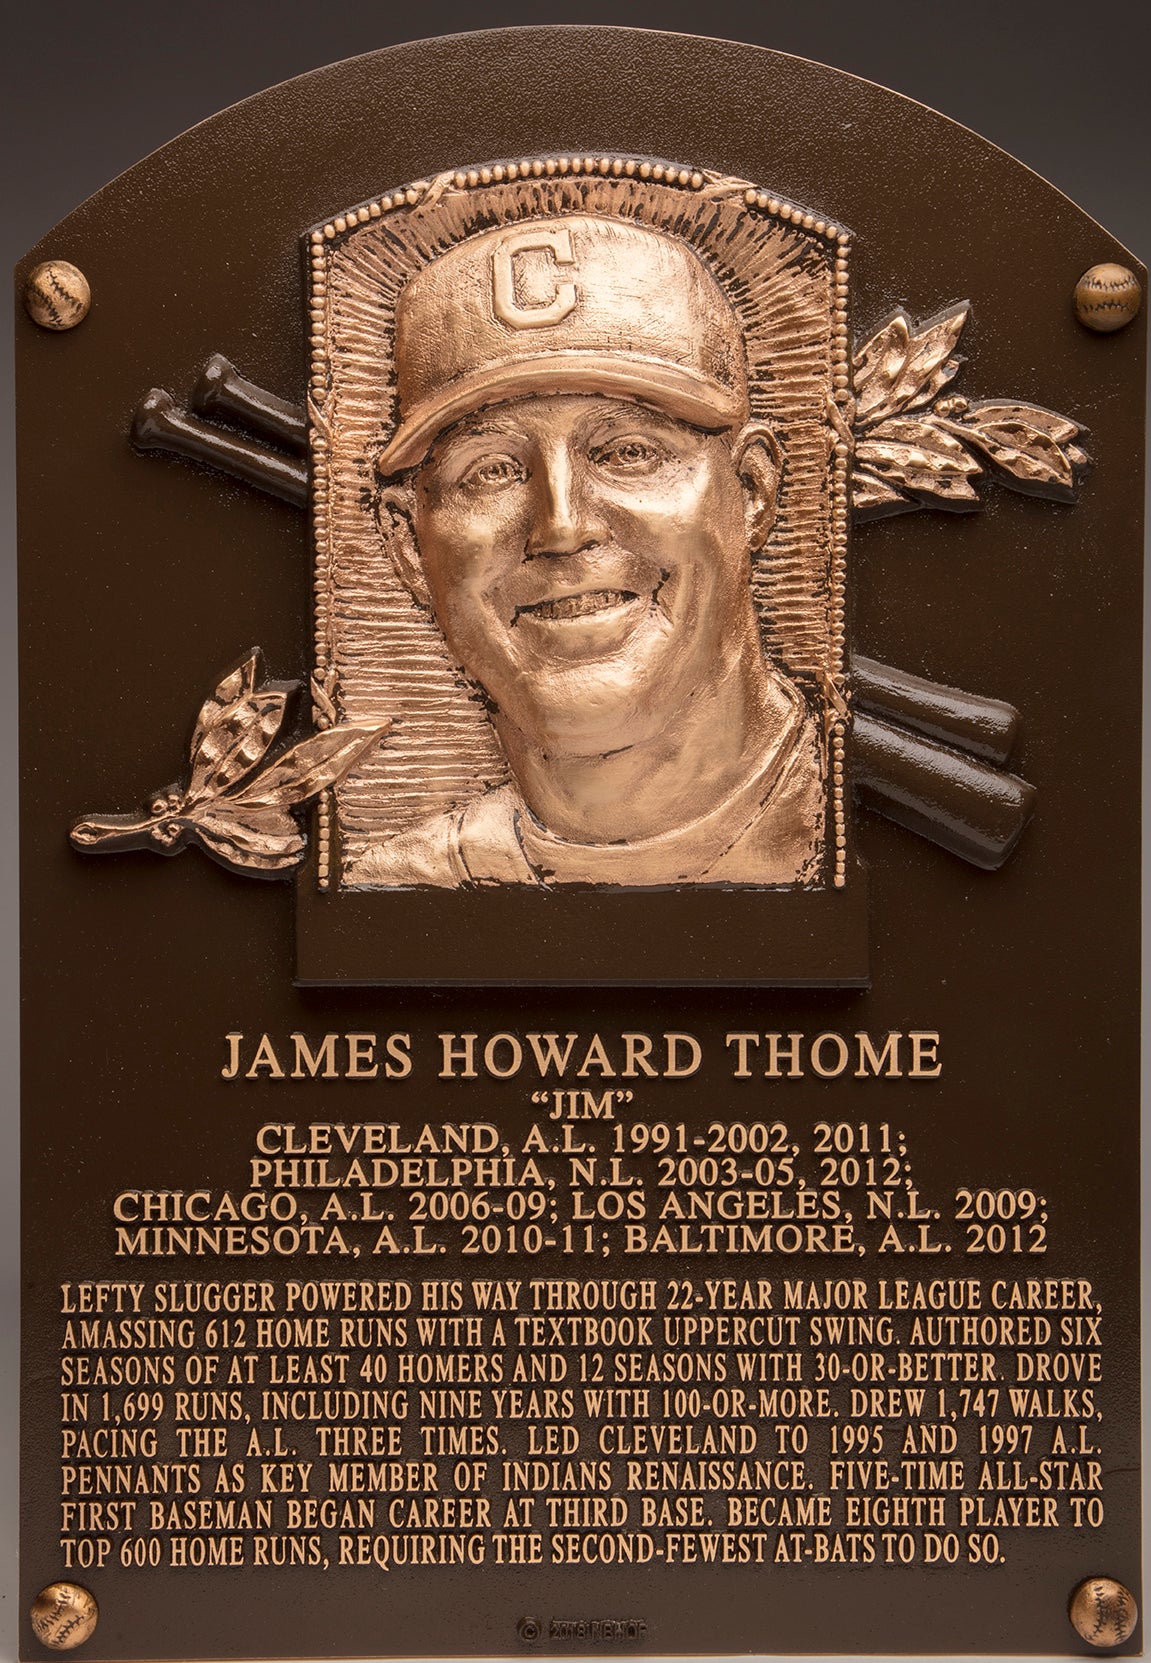 Jim Thome Hall of Fame plaque